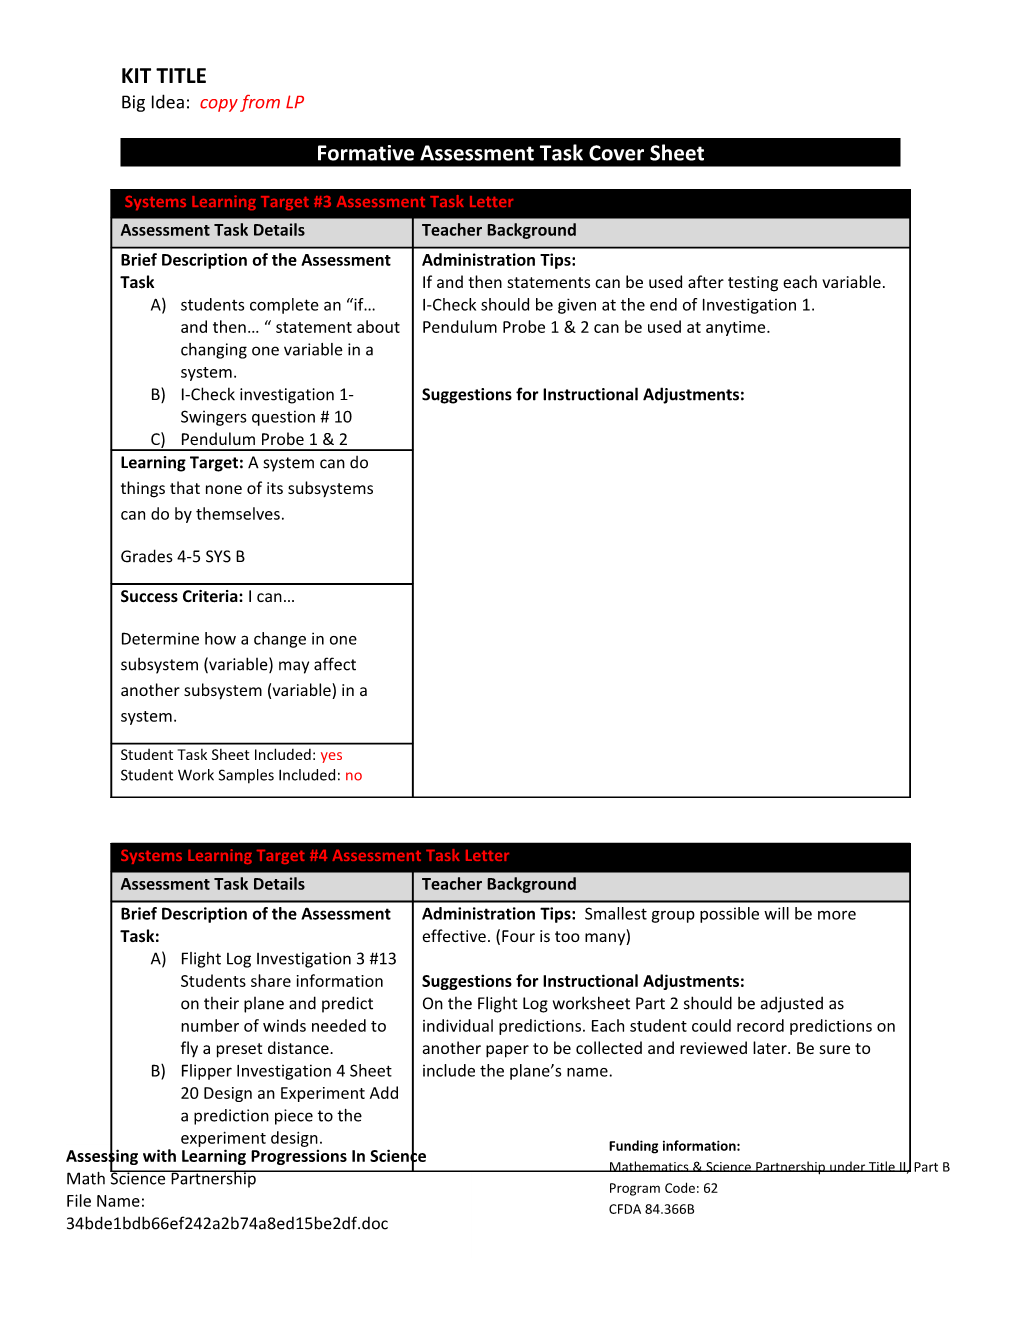 Formative Assessment Task Cover Sheet